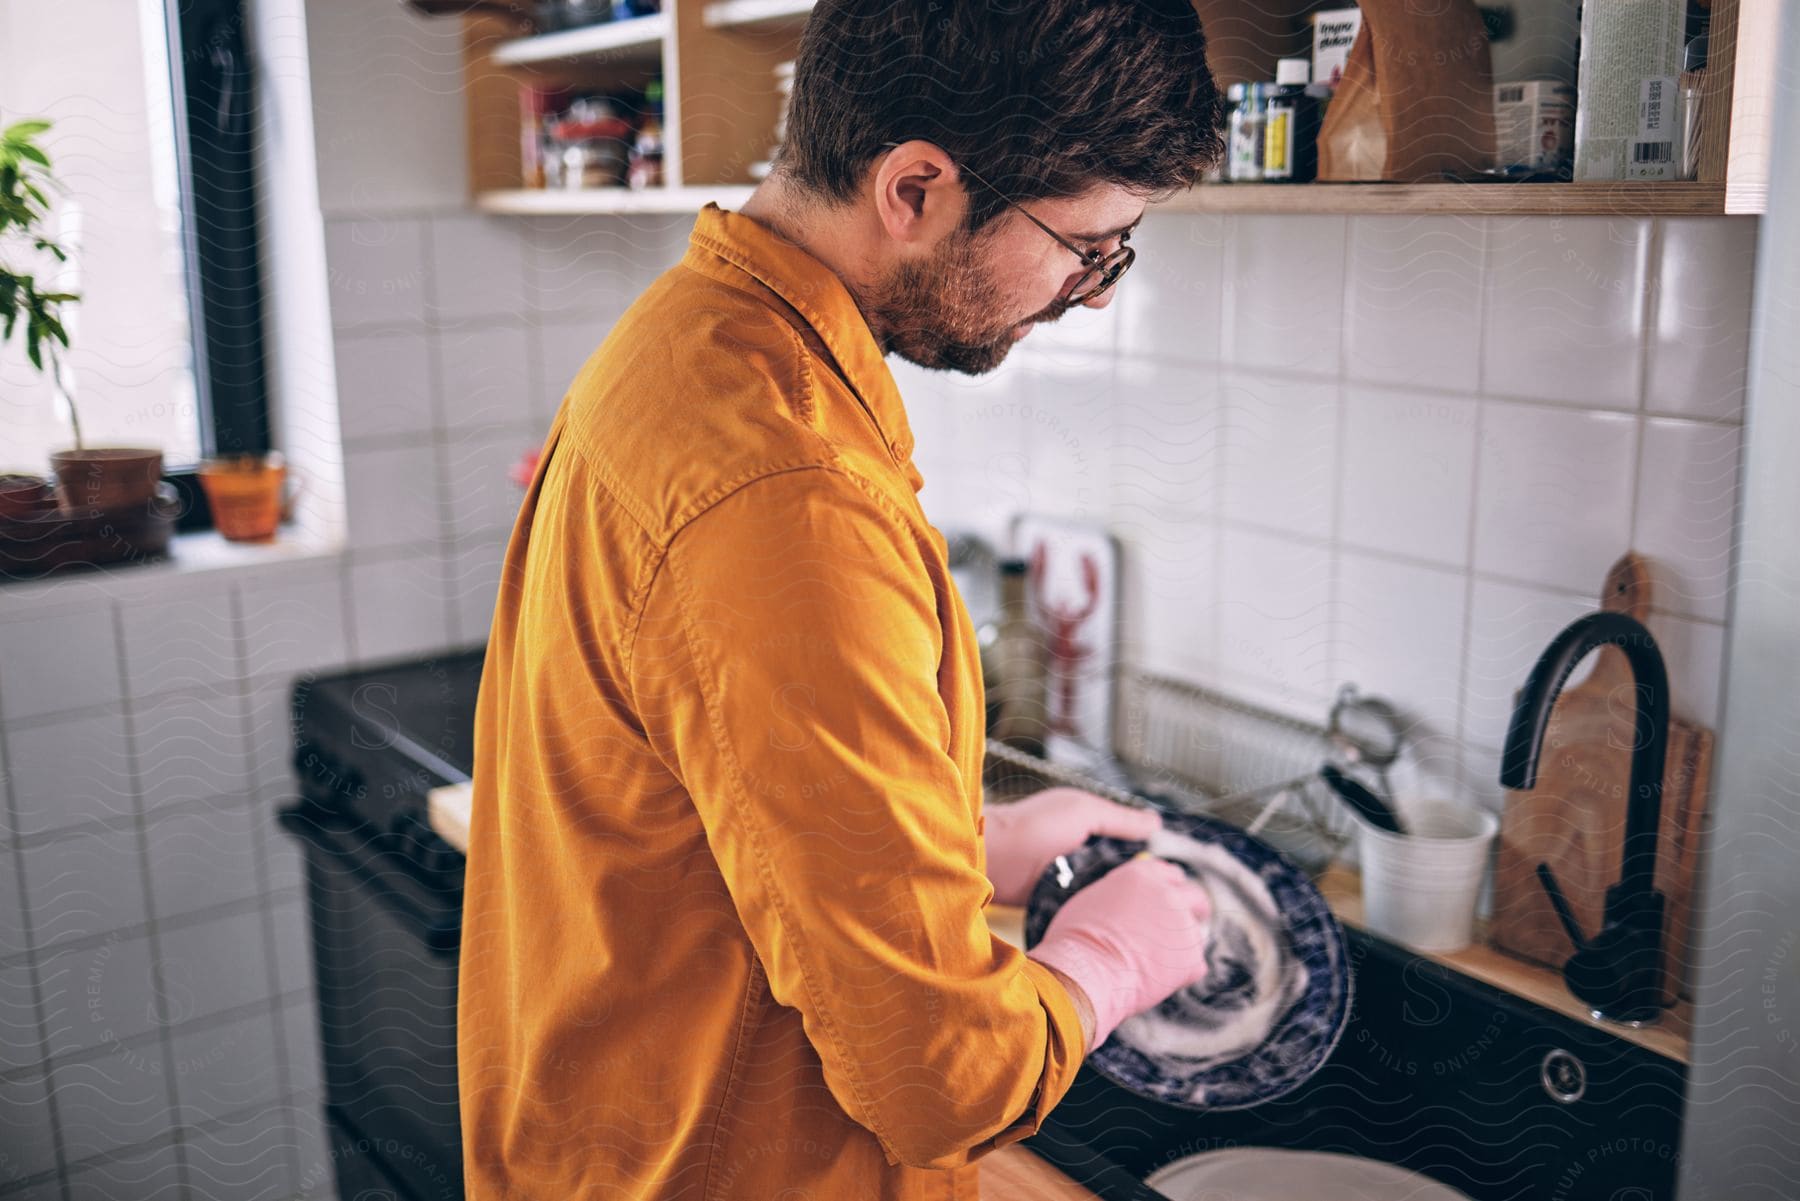 A man in a dark yellow shirt hand washing dishes.